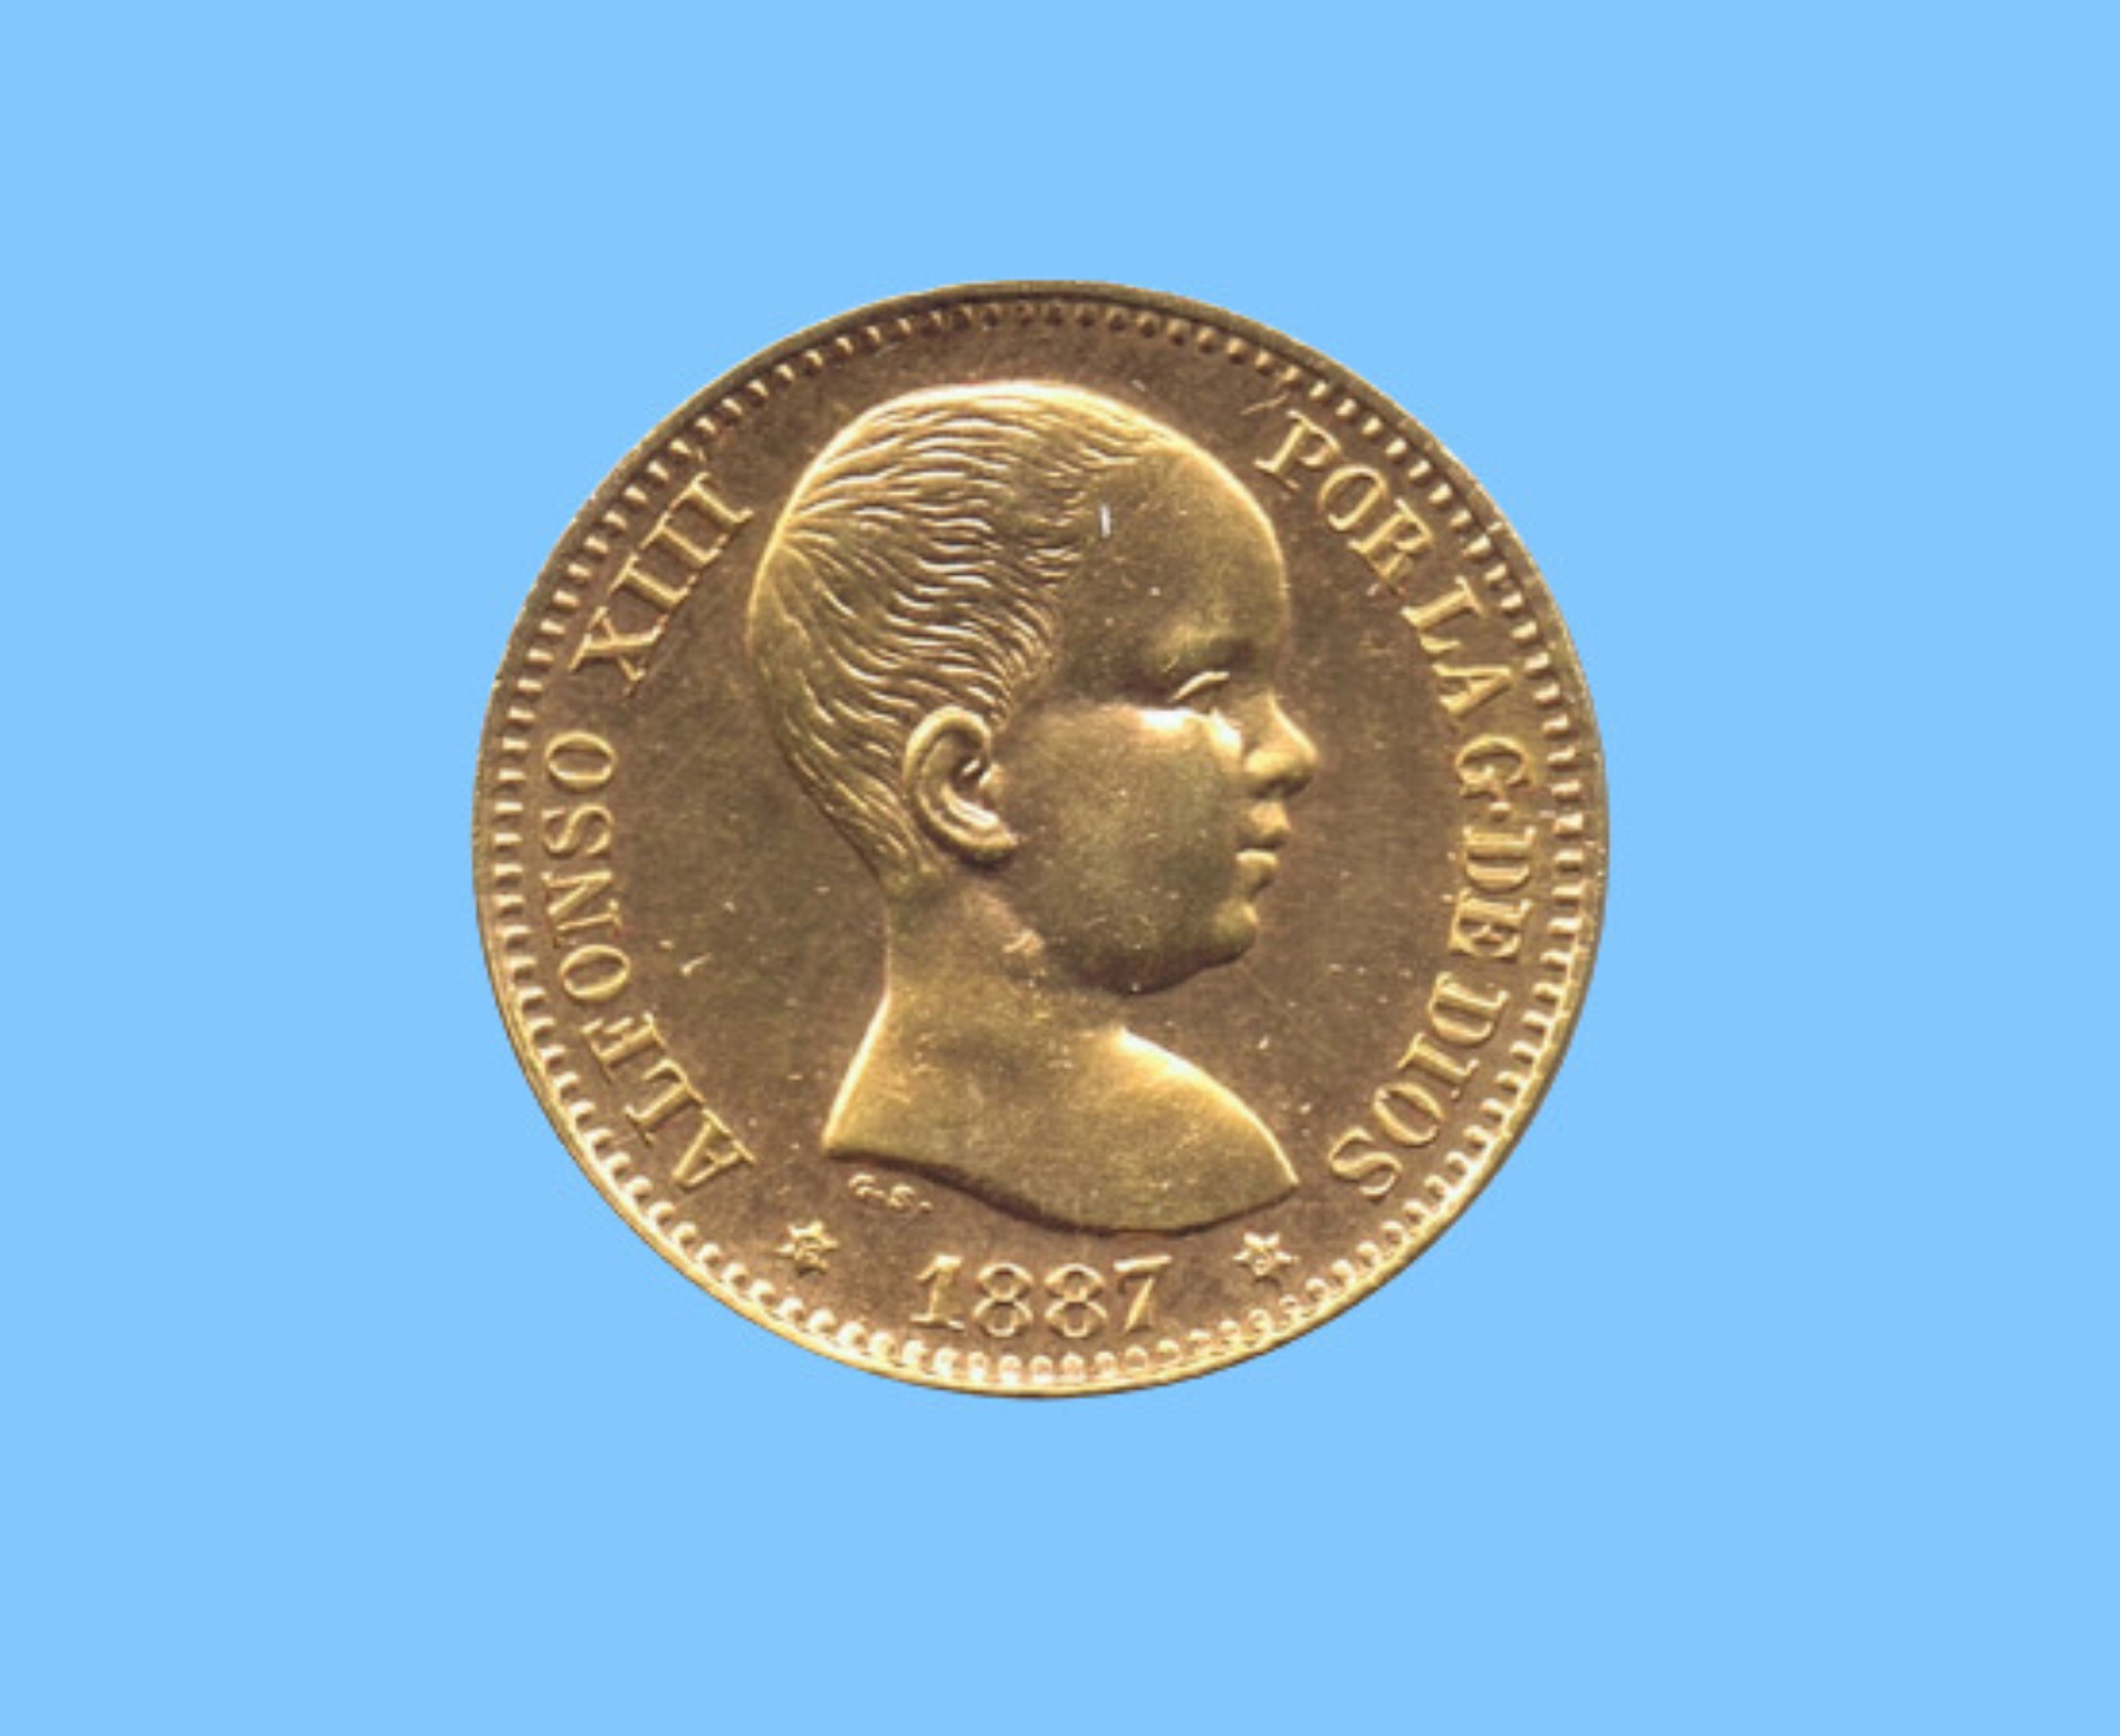 20 pesetas de 1887